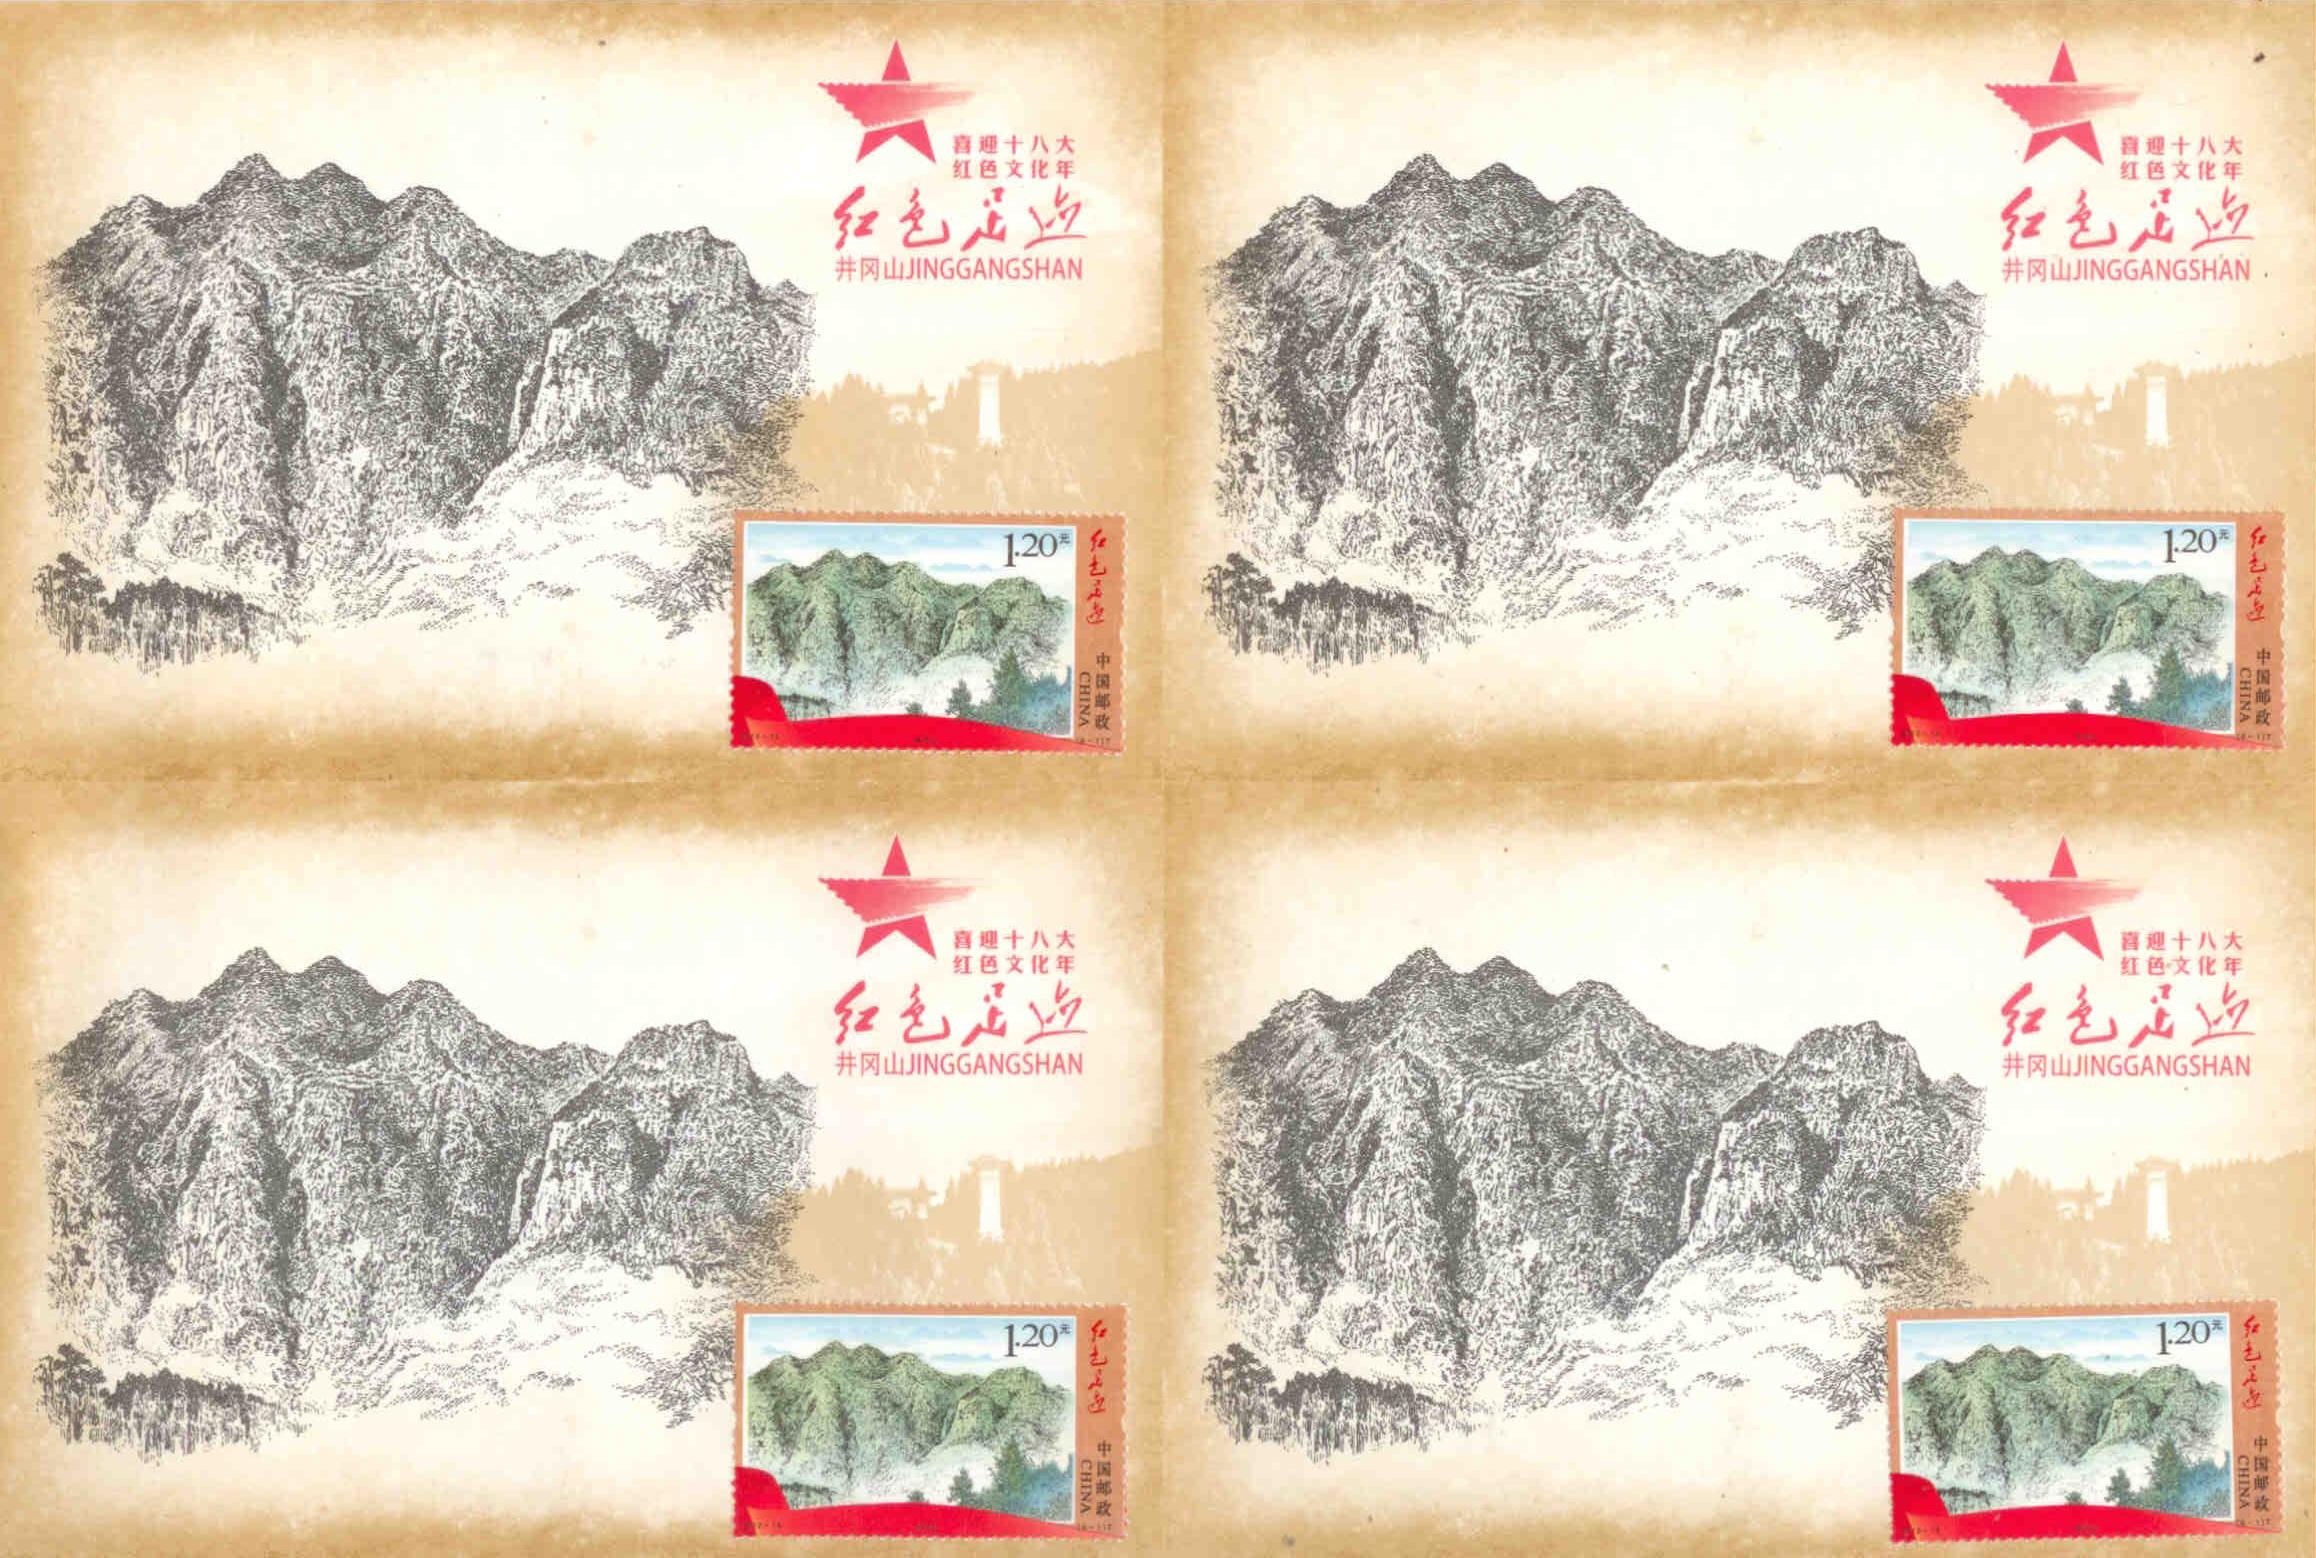 Shining Past – sample page of maximum cards (PR China)